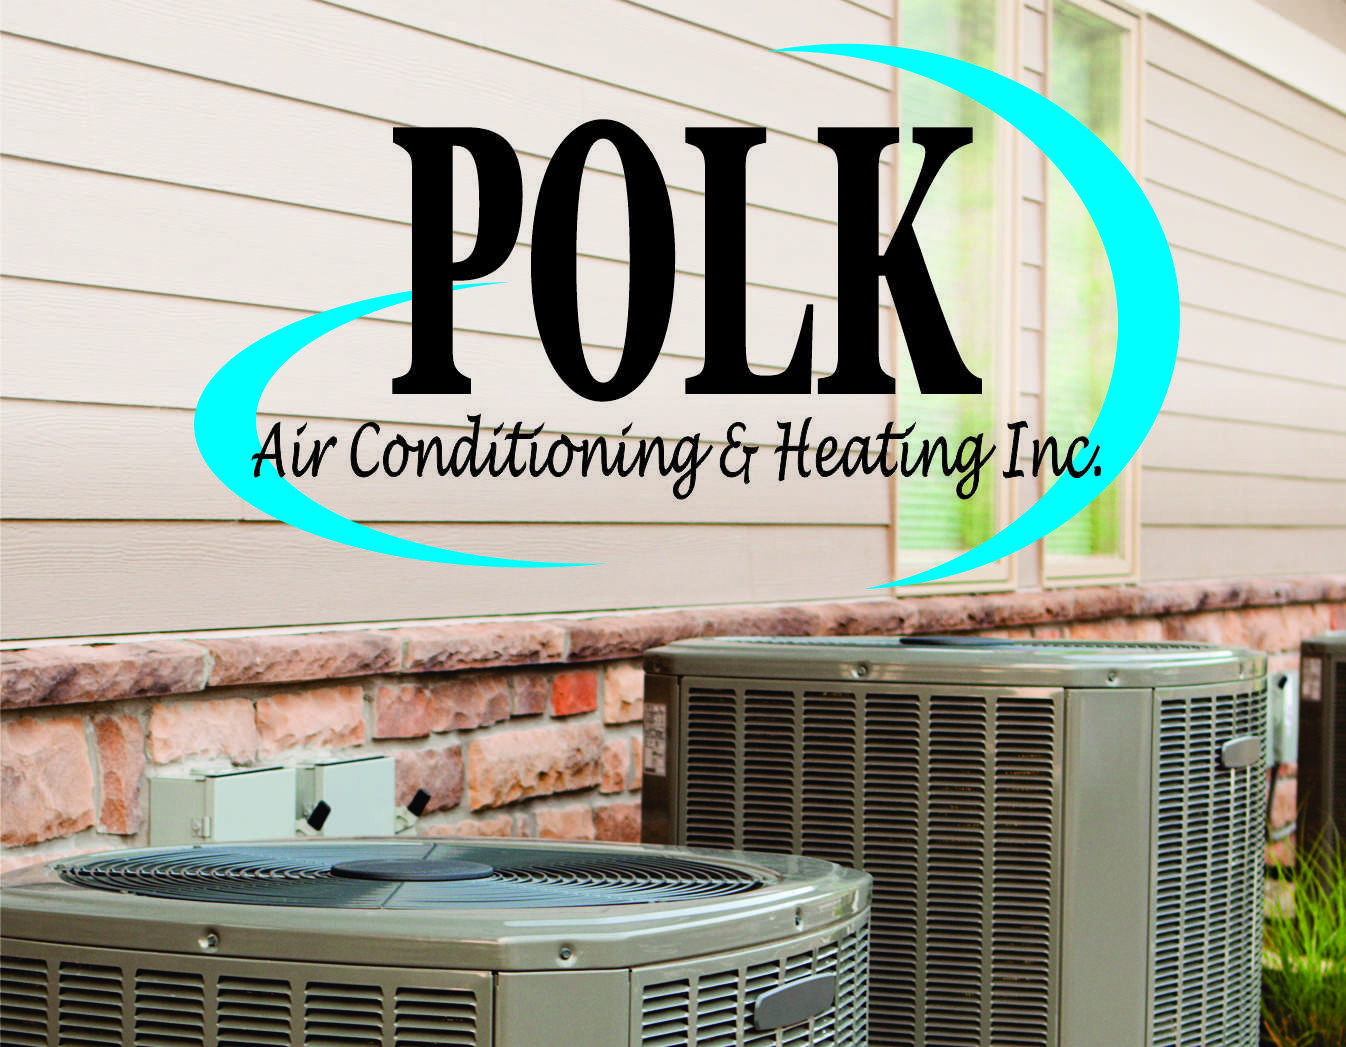 Polk Air Conditioning & Heating